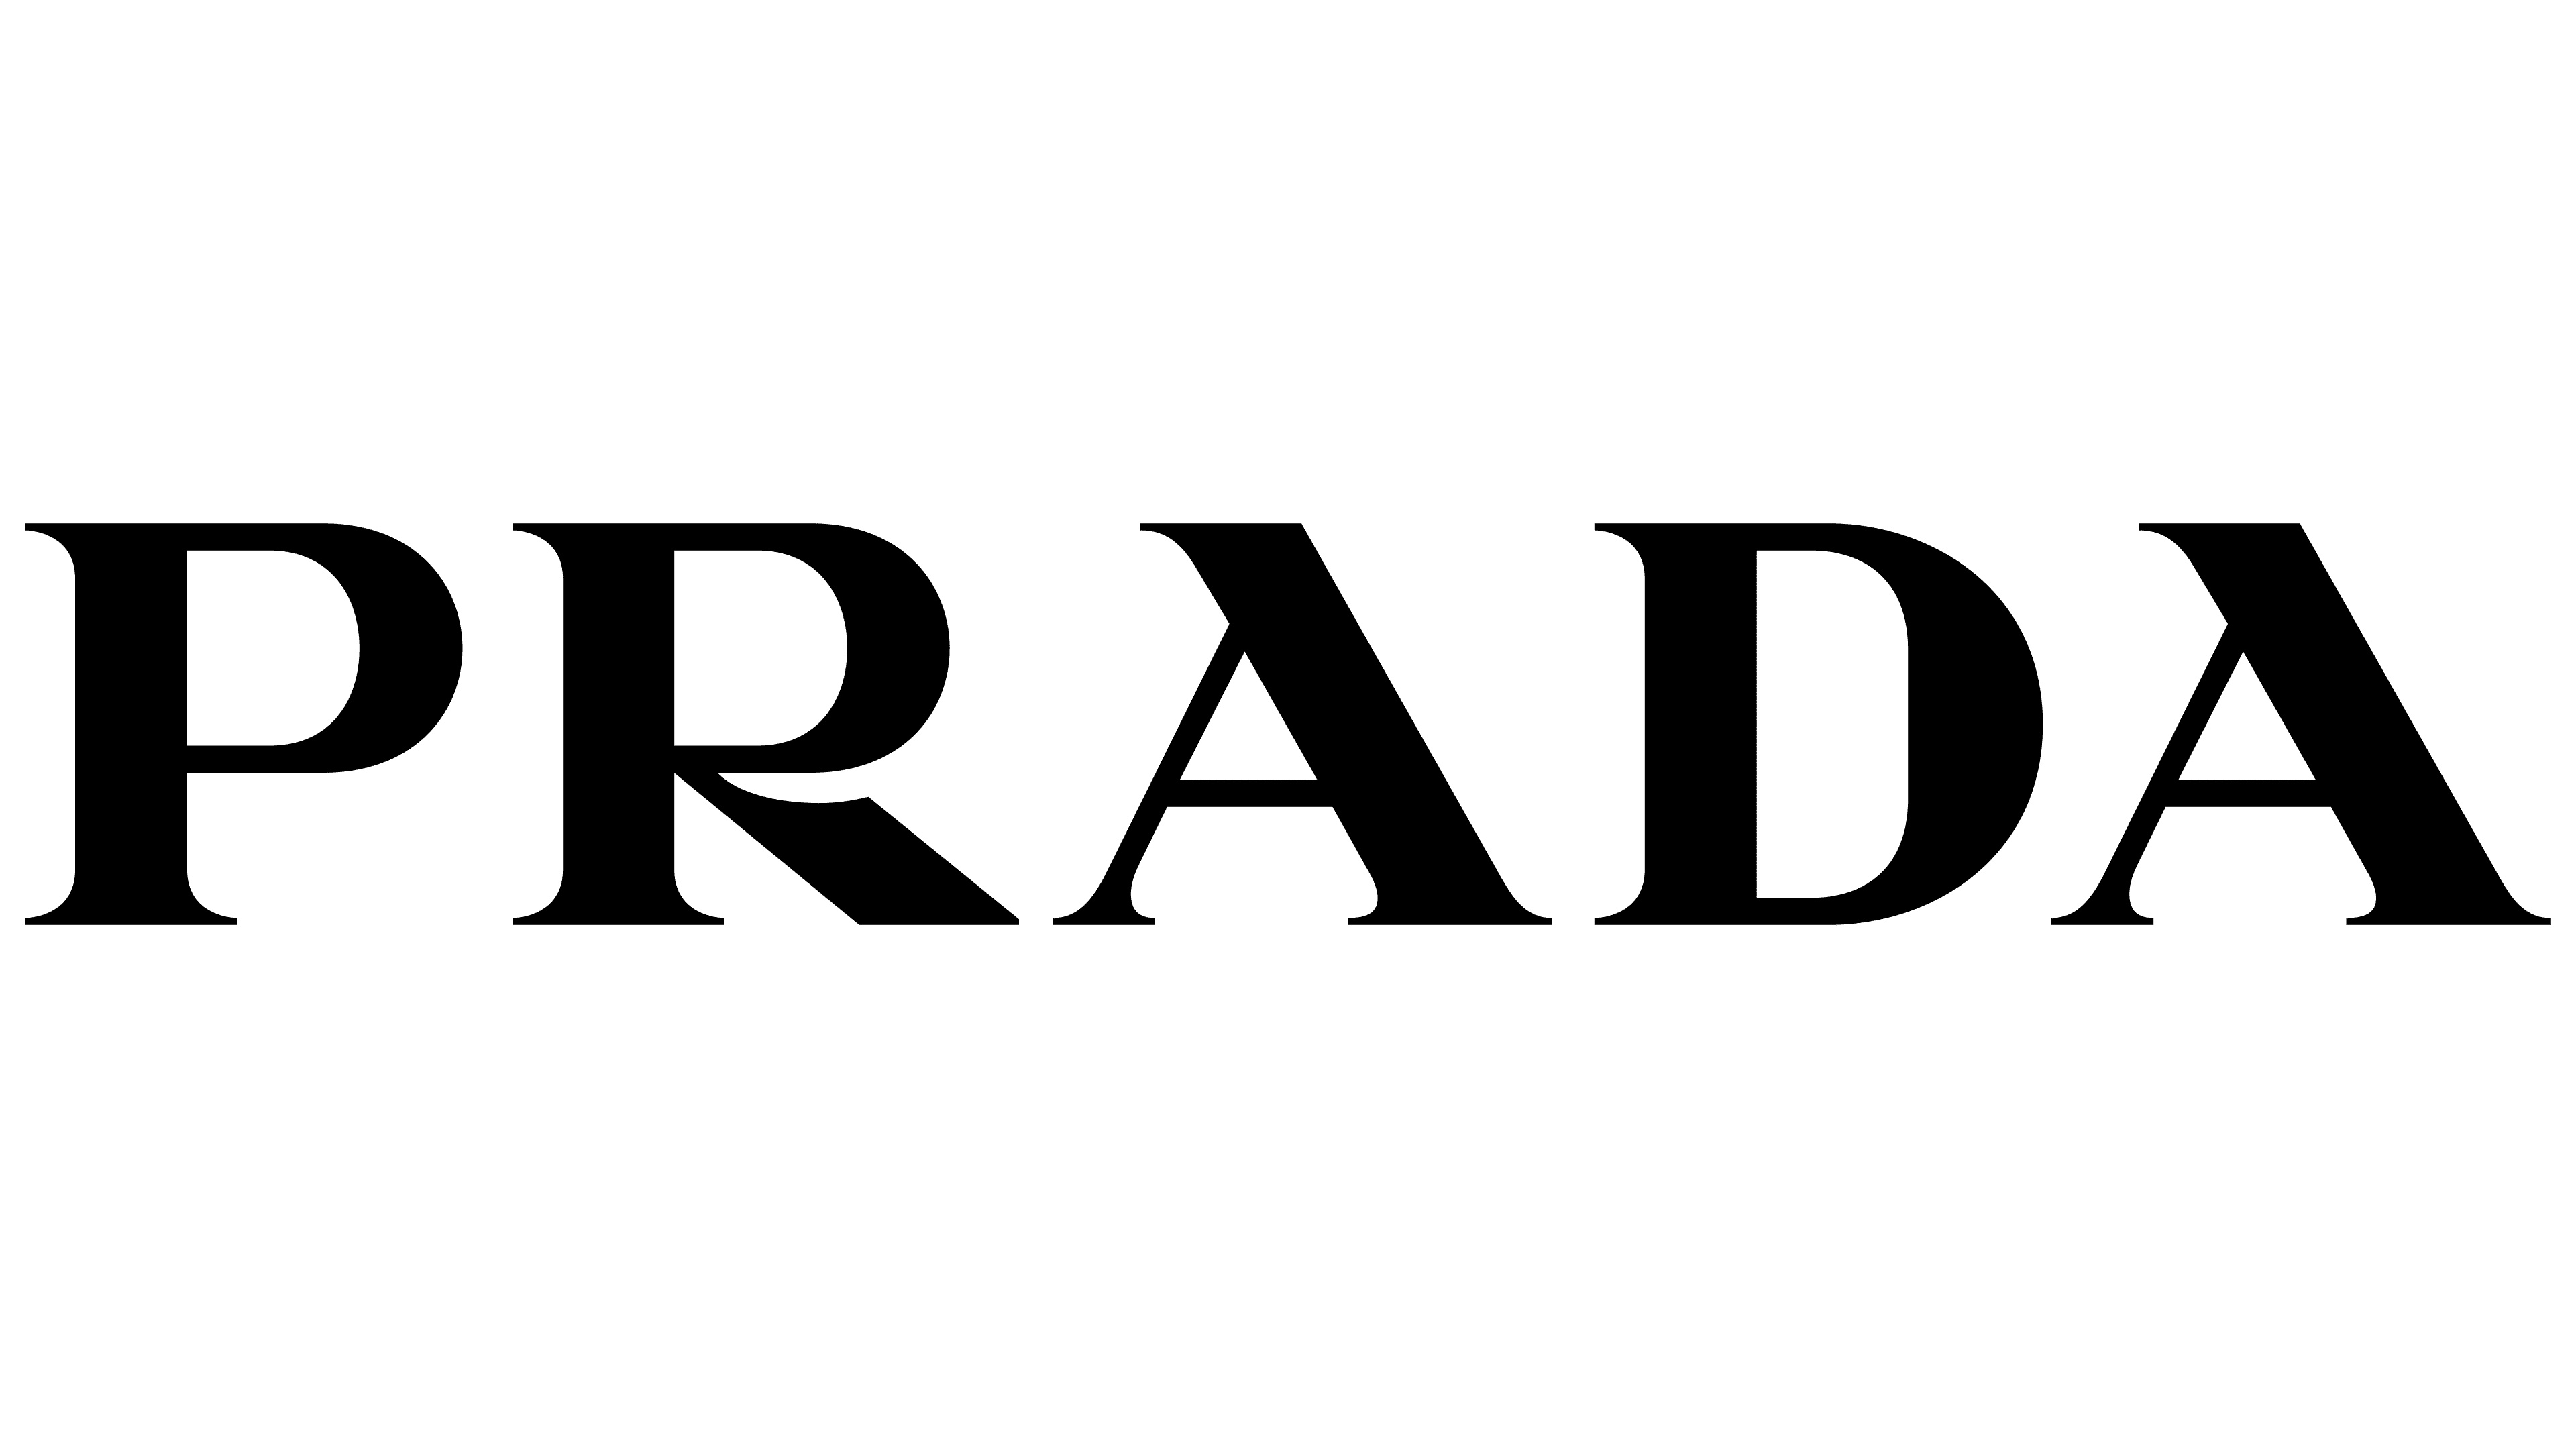 Prada: An Italian luxury fashion house founded in 1913, Logo. 3840x2160 4K Wallpaper.